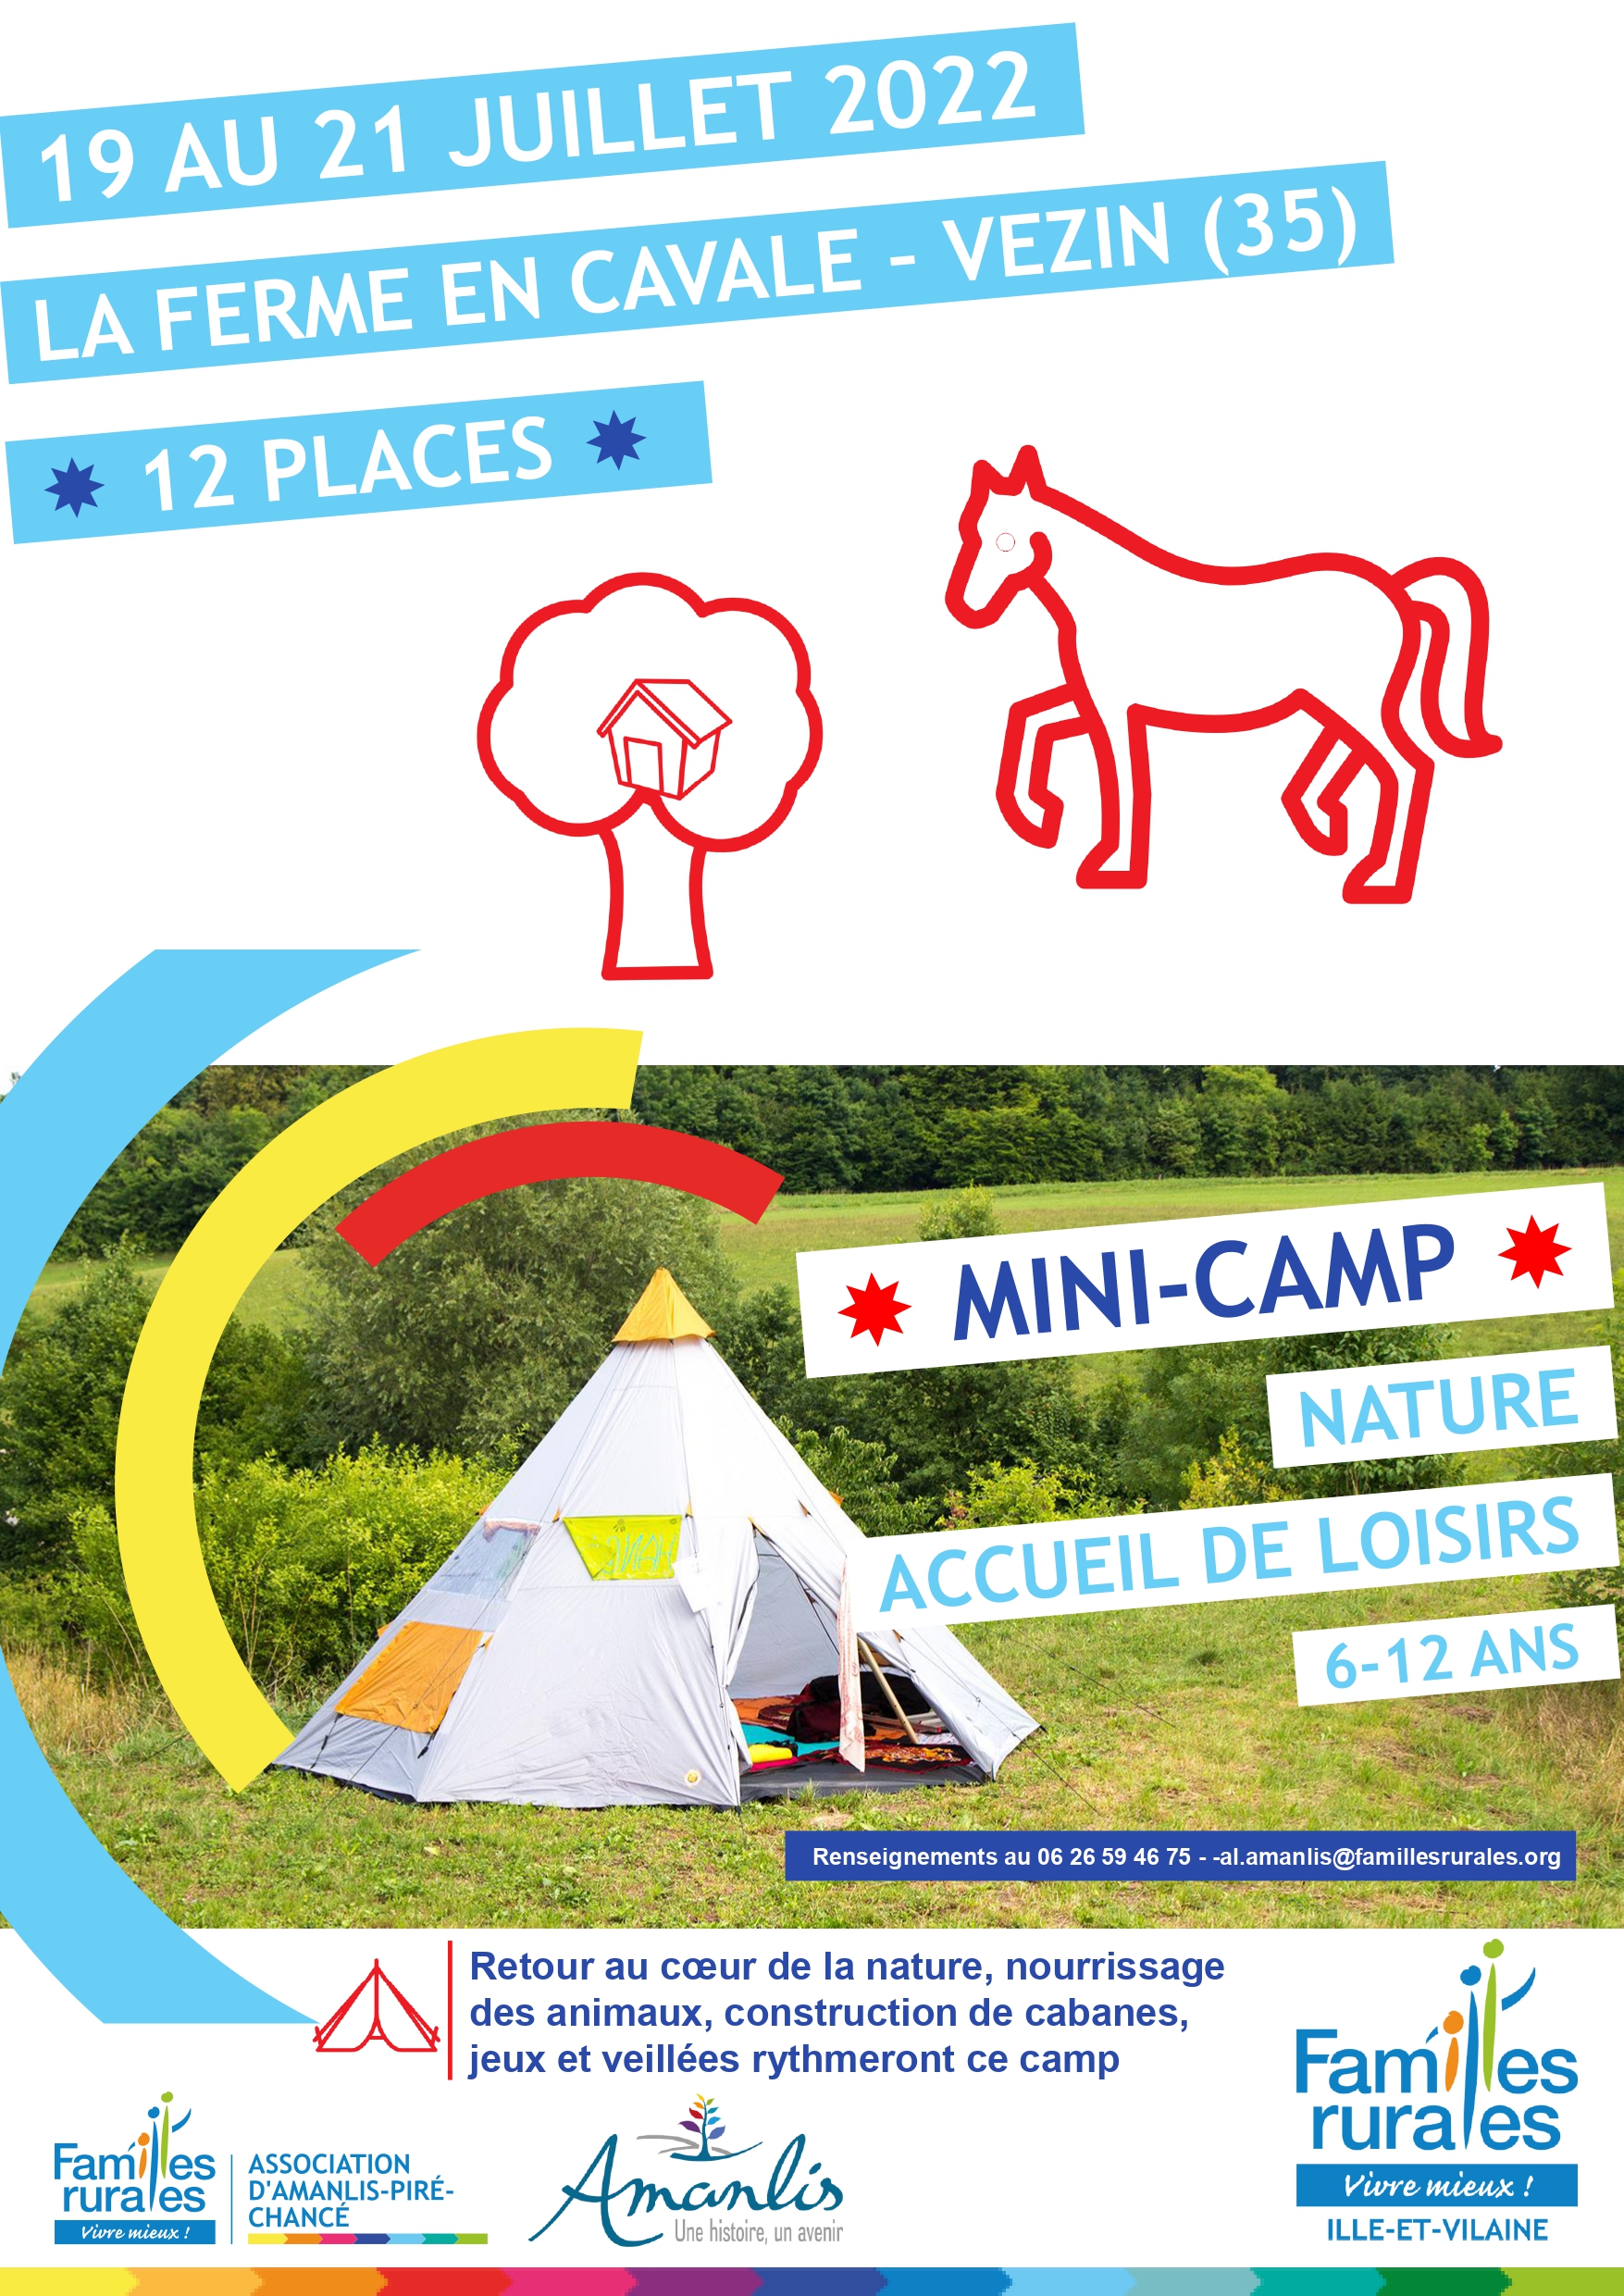 Mini-Camp 6-12 ans Nature - JUILLET